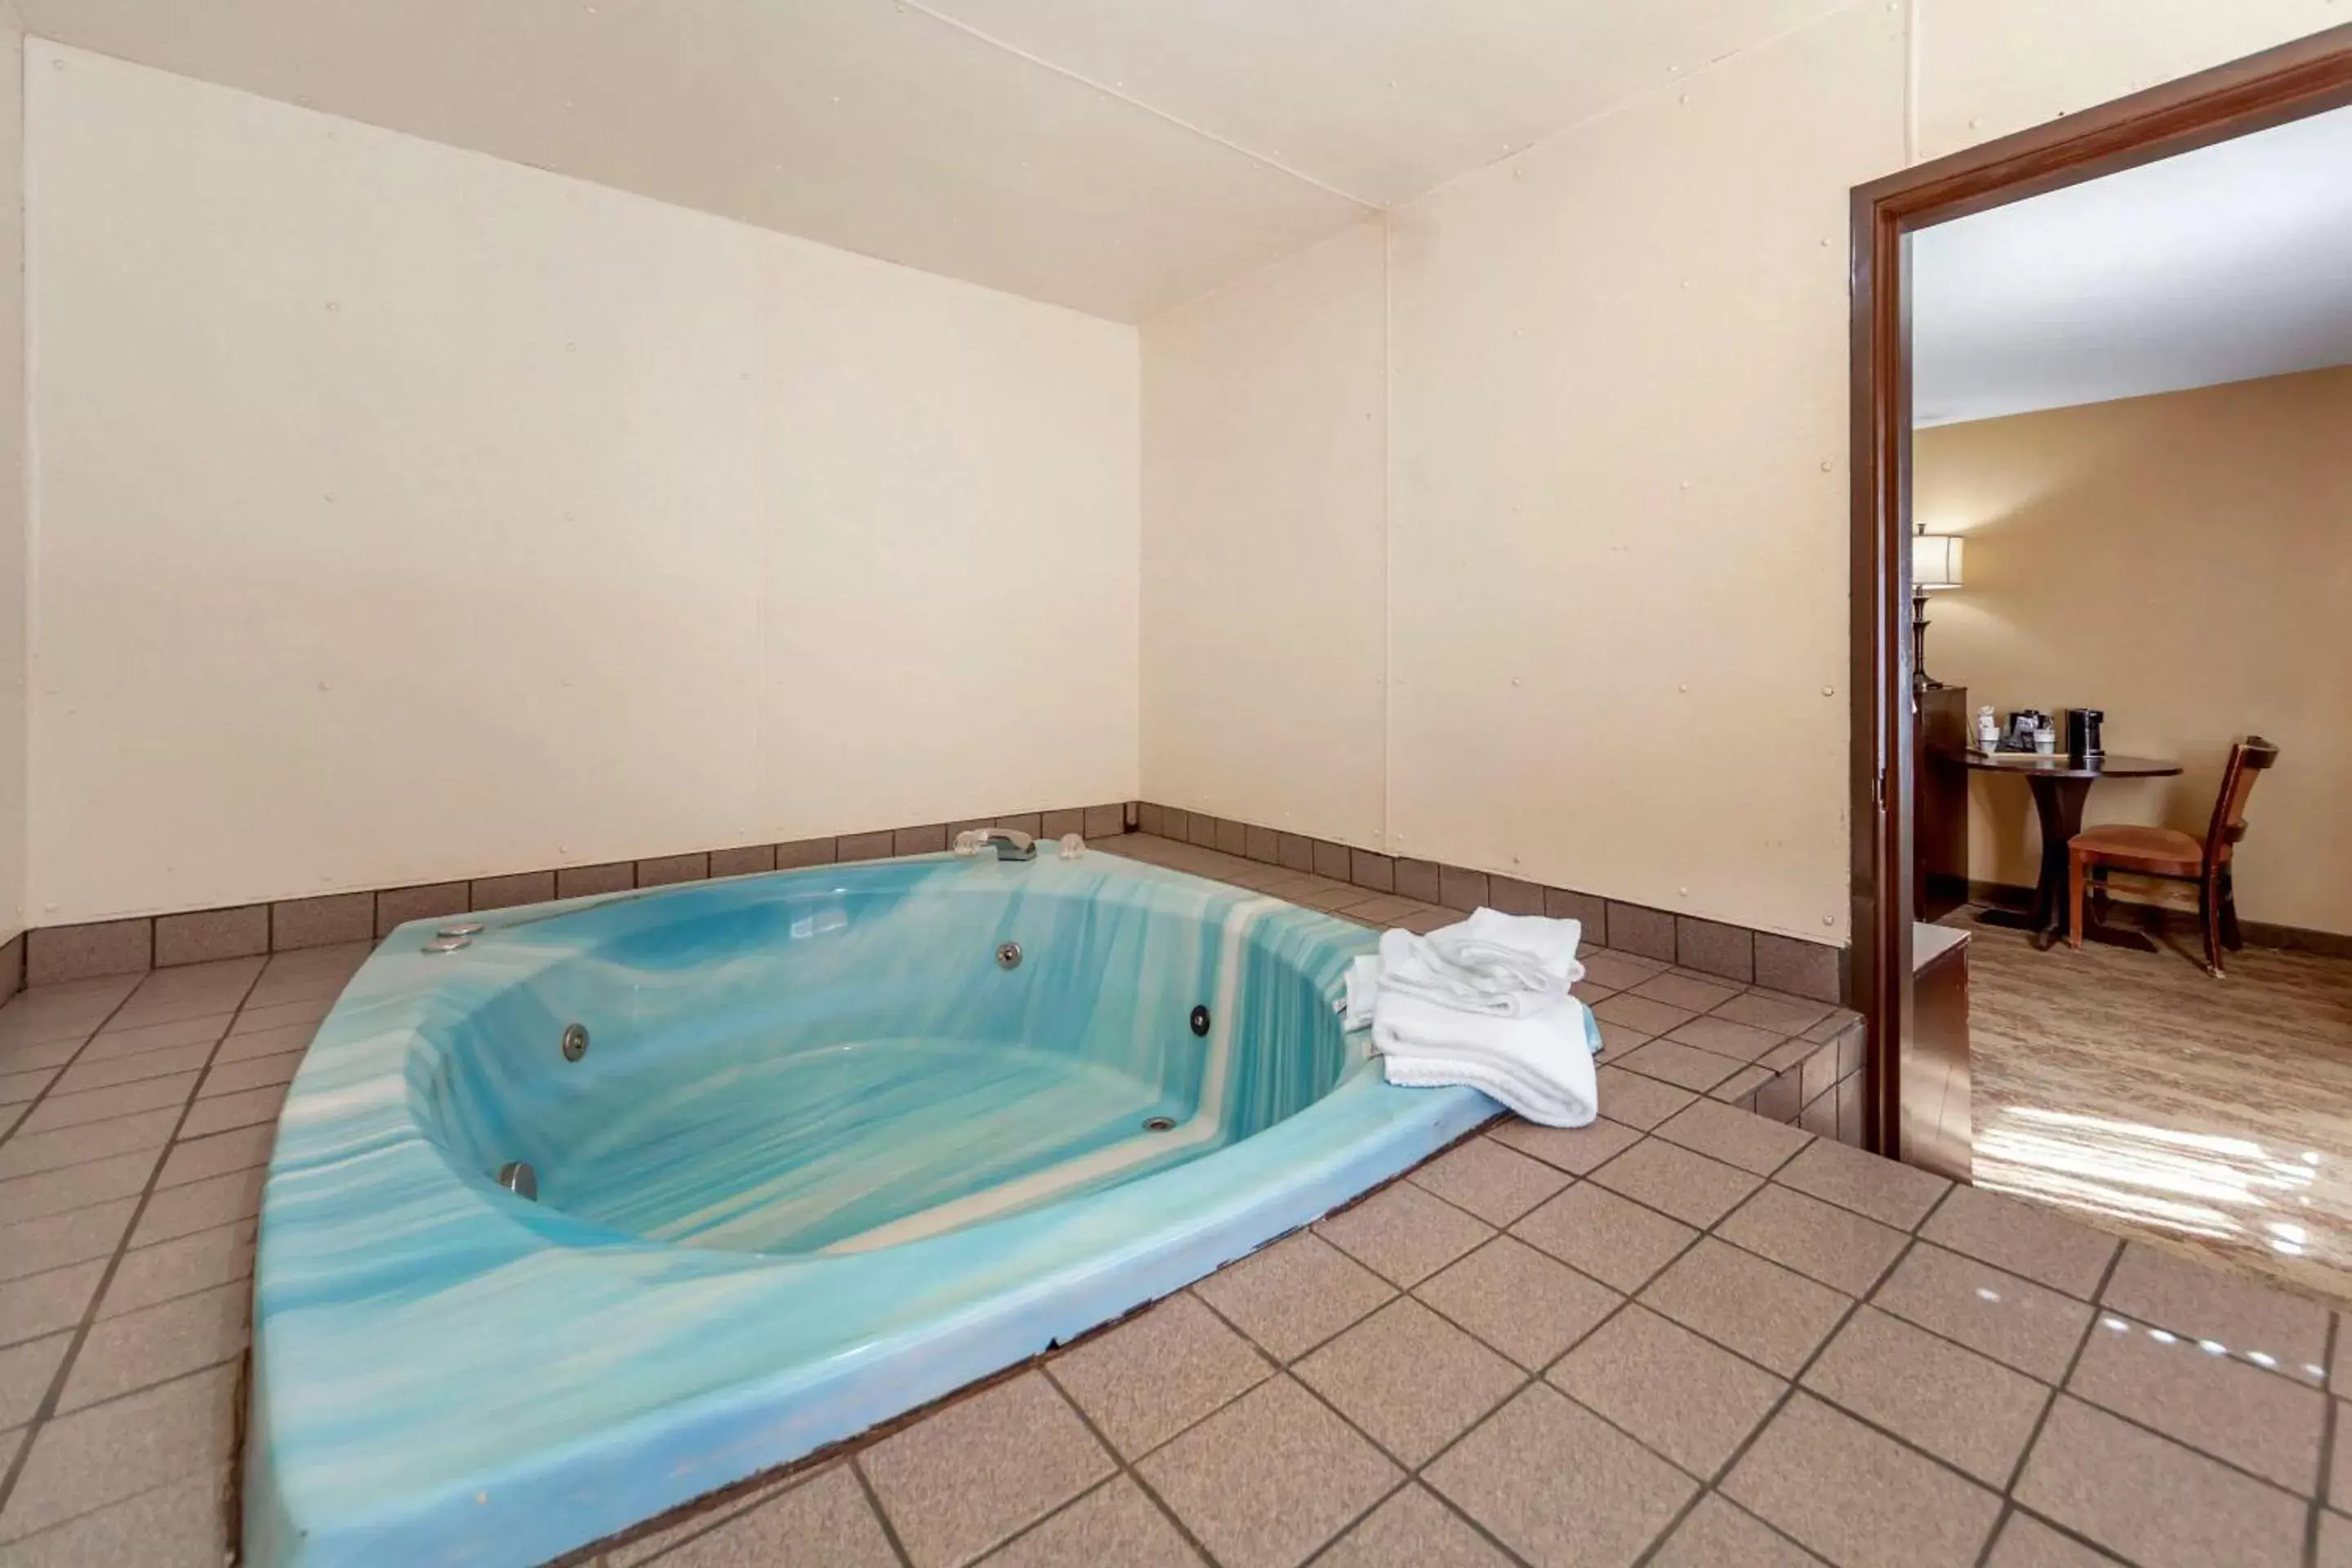 Photo of the whole room, Bathroom in Econo Lodge Black Hills